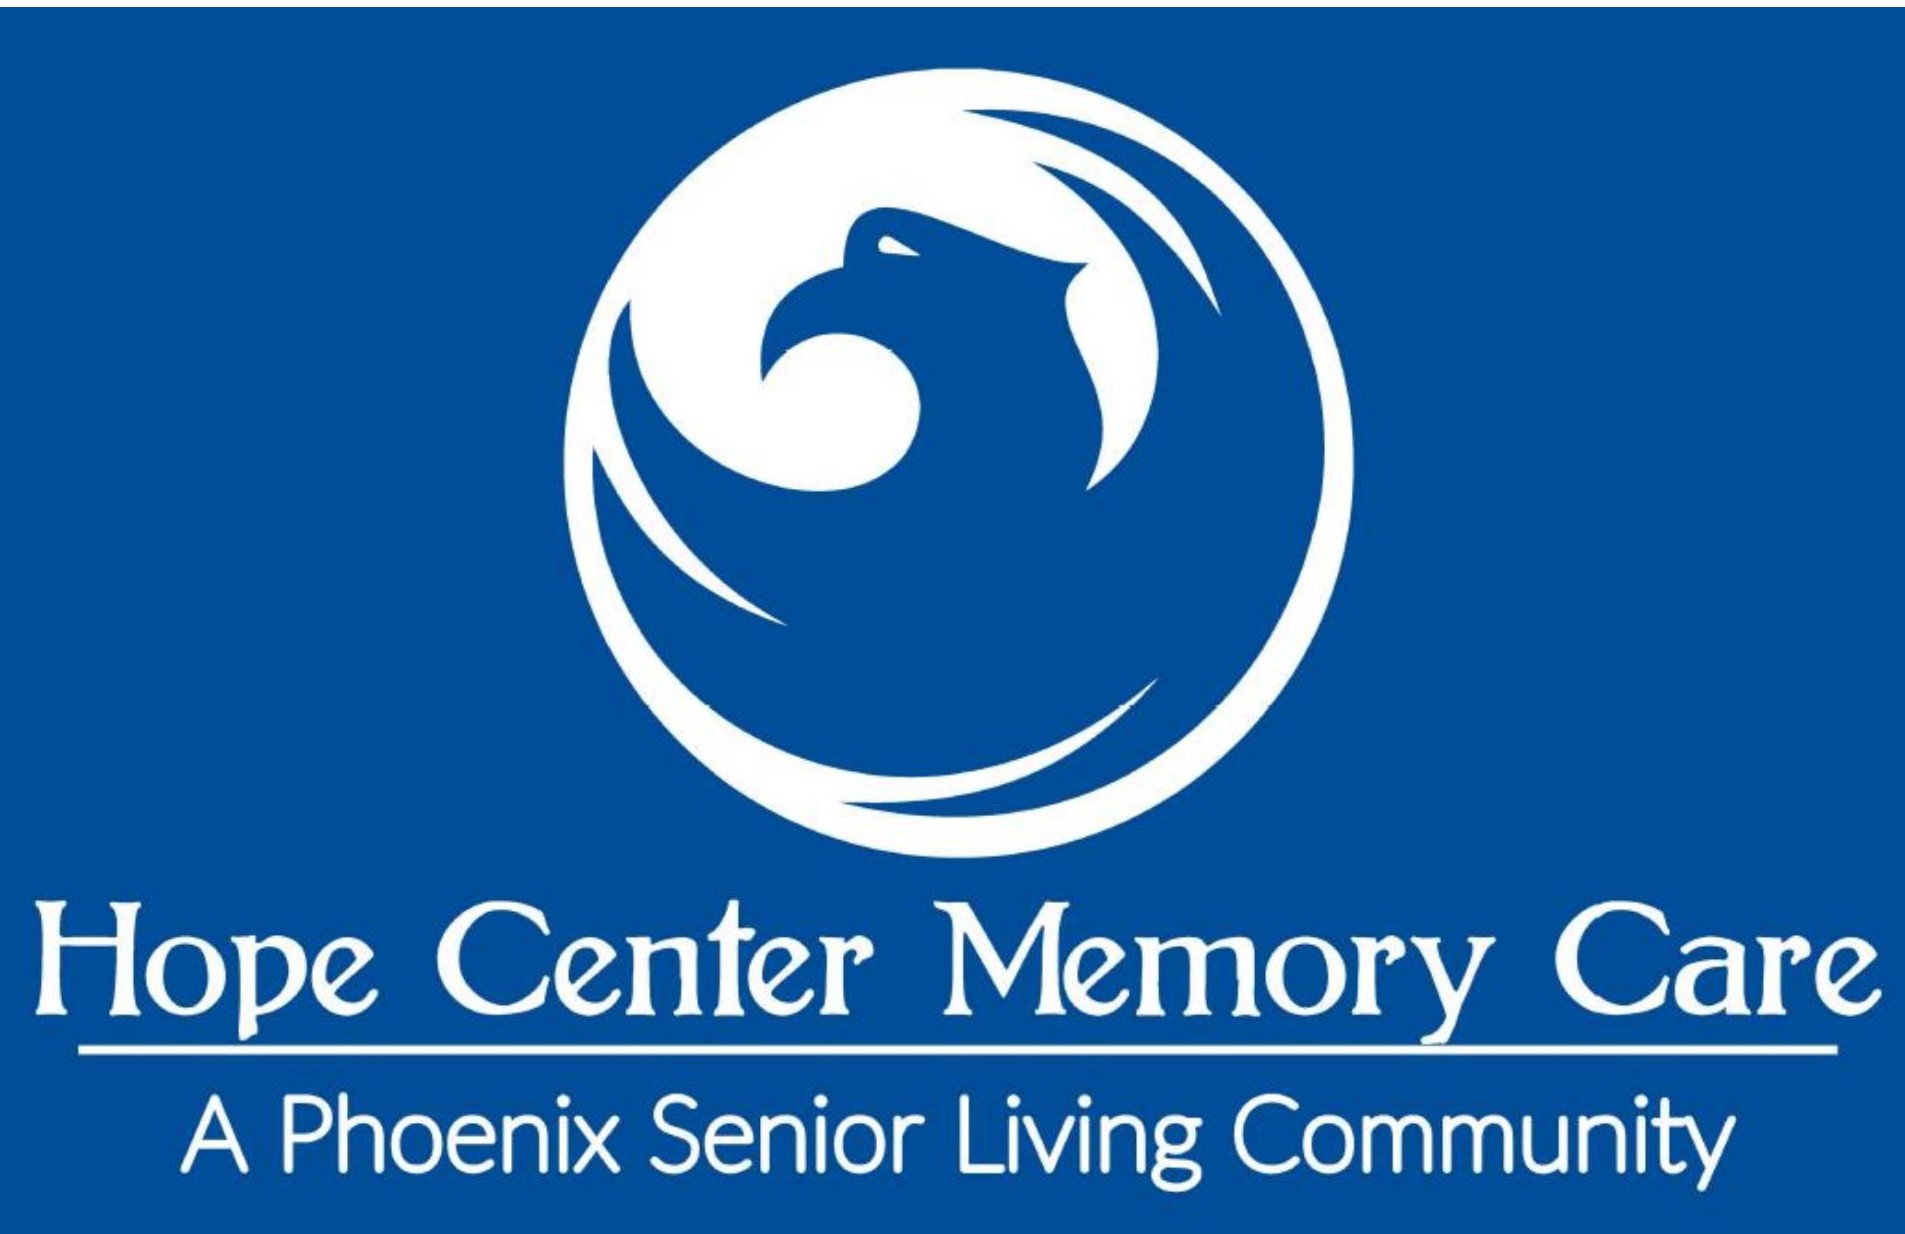 3. Hope Center Memory Care (Purple)